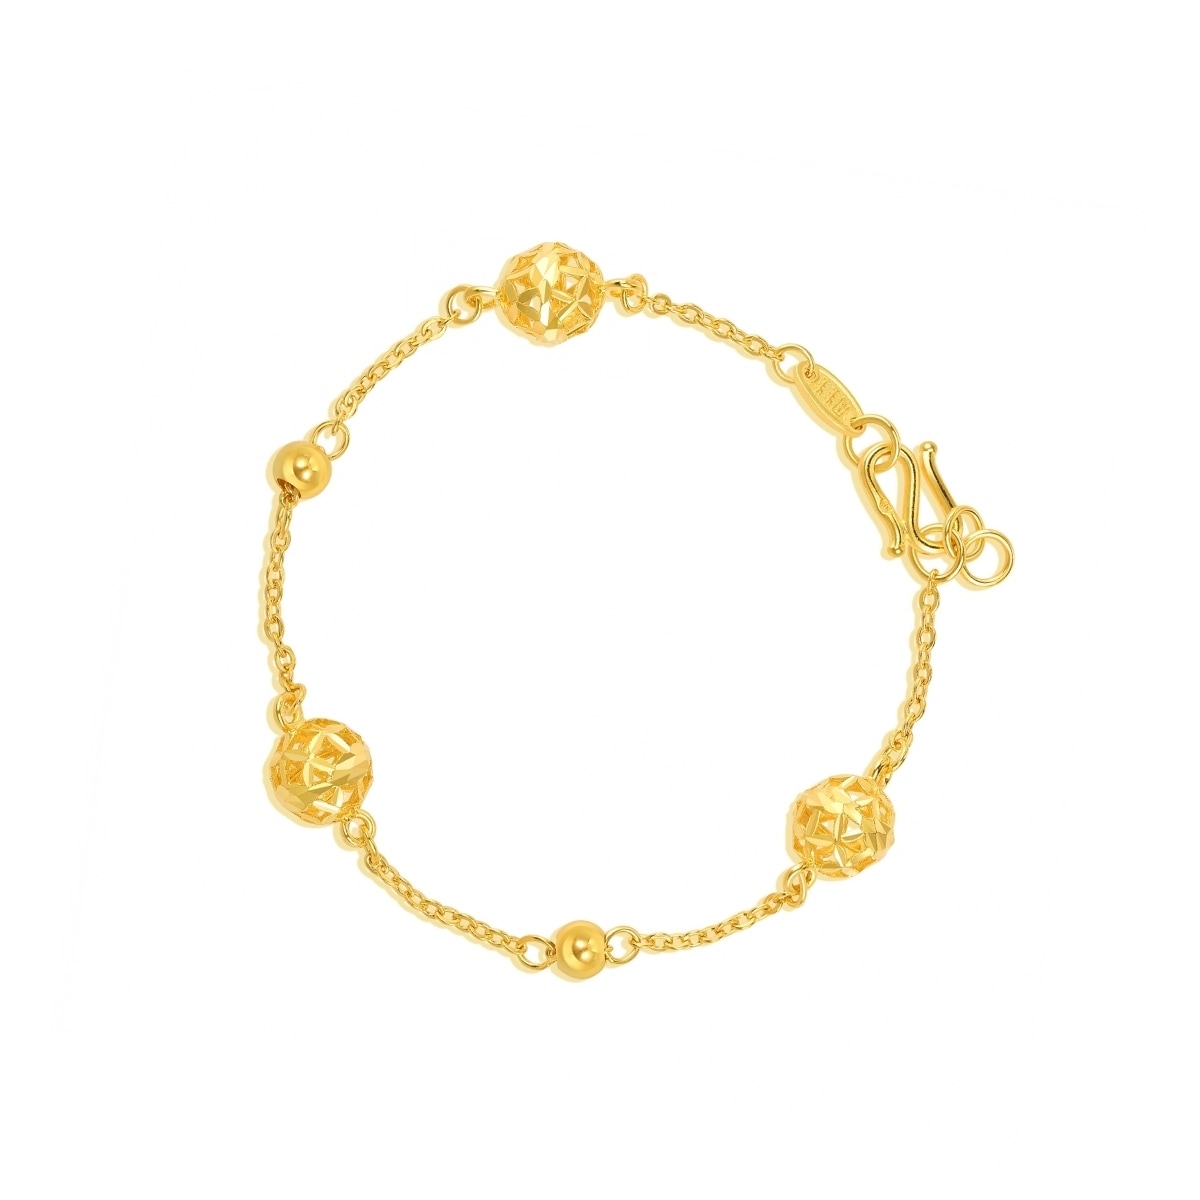 999.9 Gold Bracelet - 84763B | Chow Sang Sang Jewellery